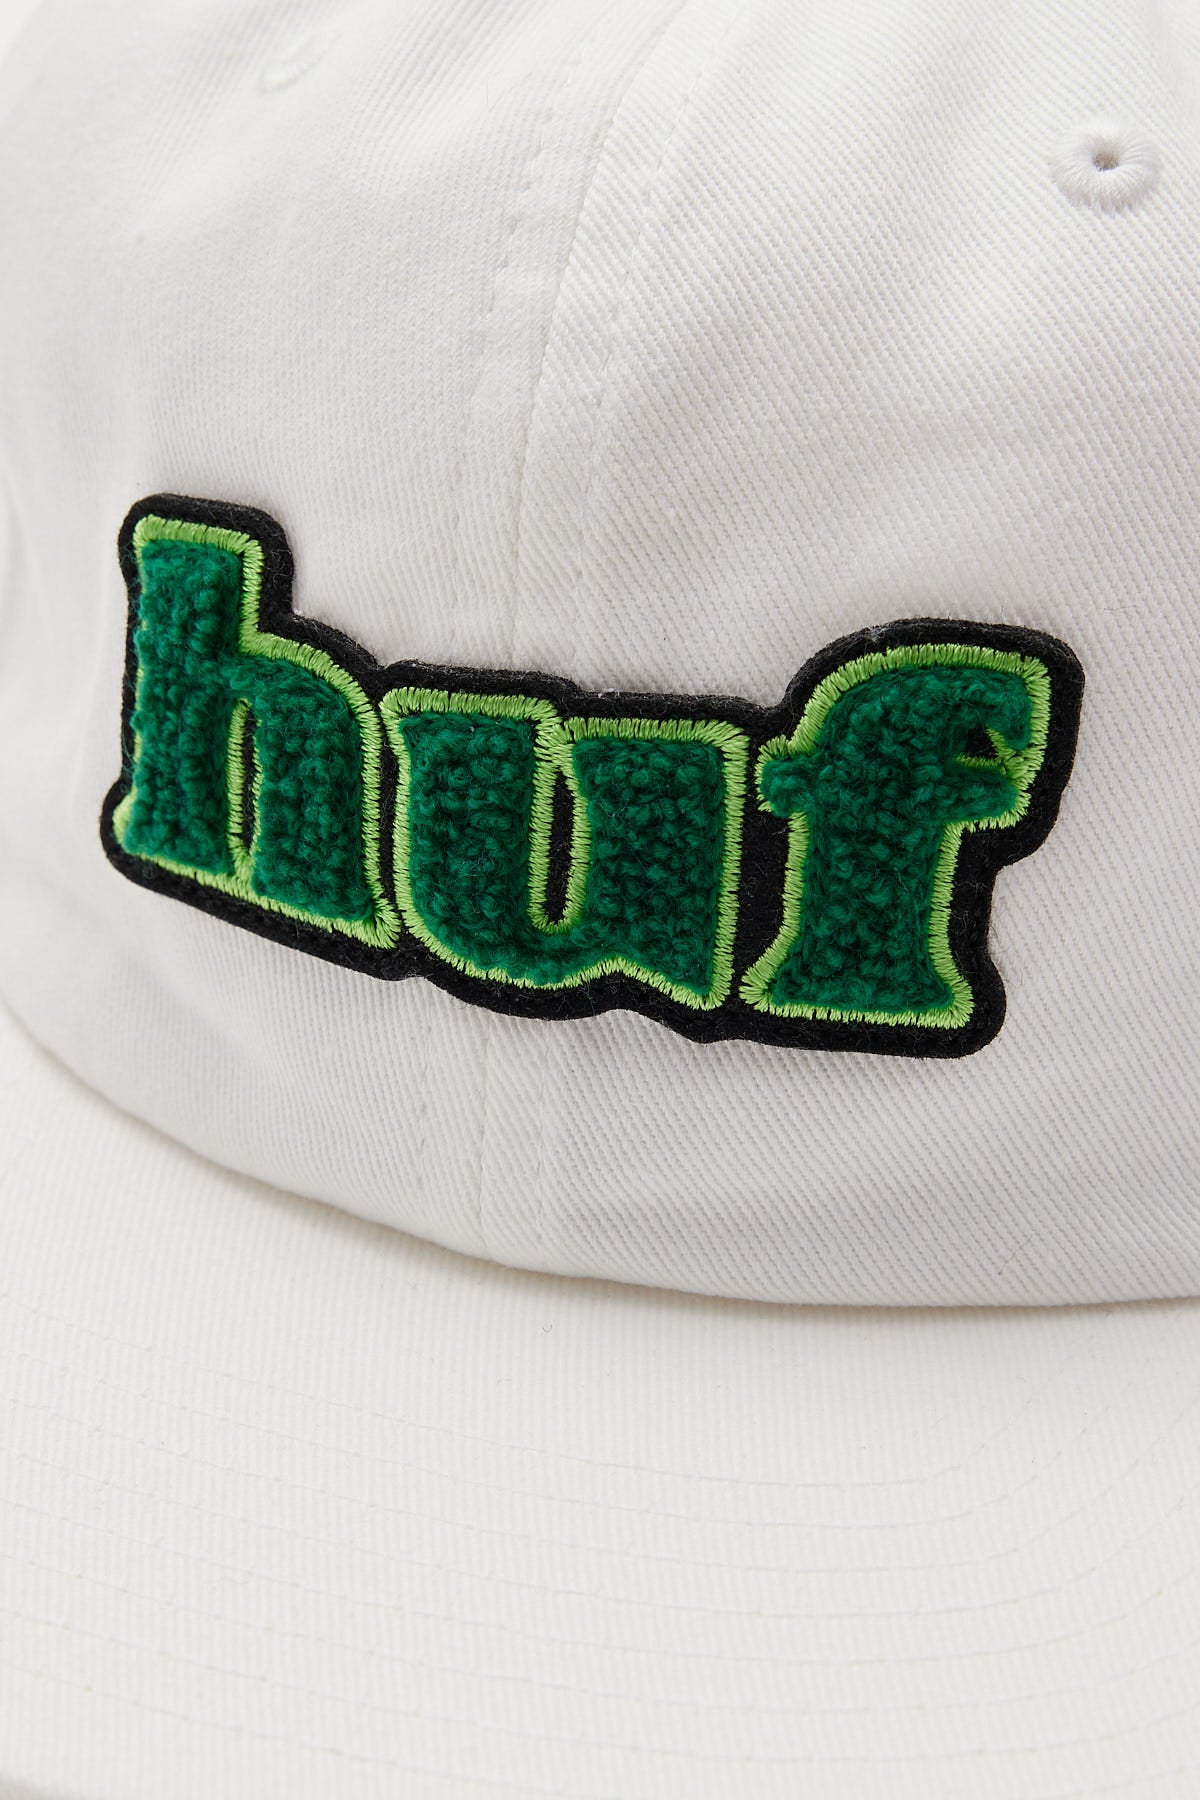 Huf Madison 6 Panel Hat White